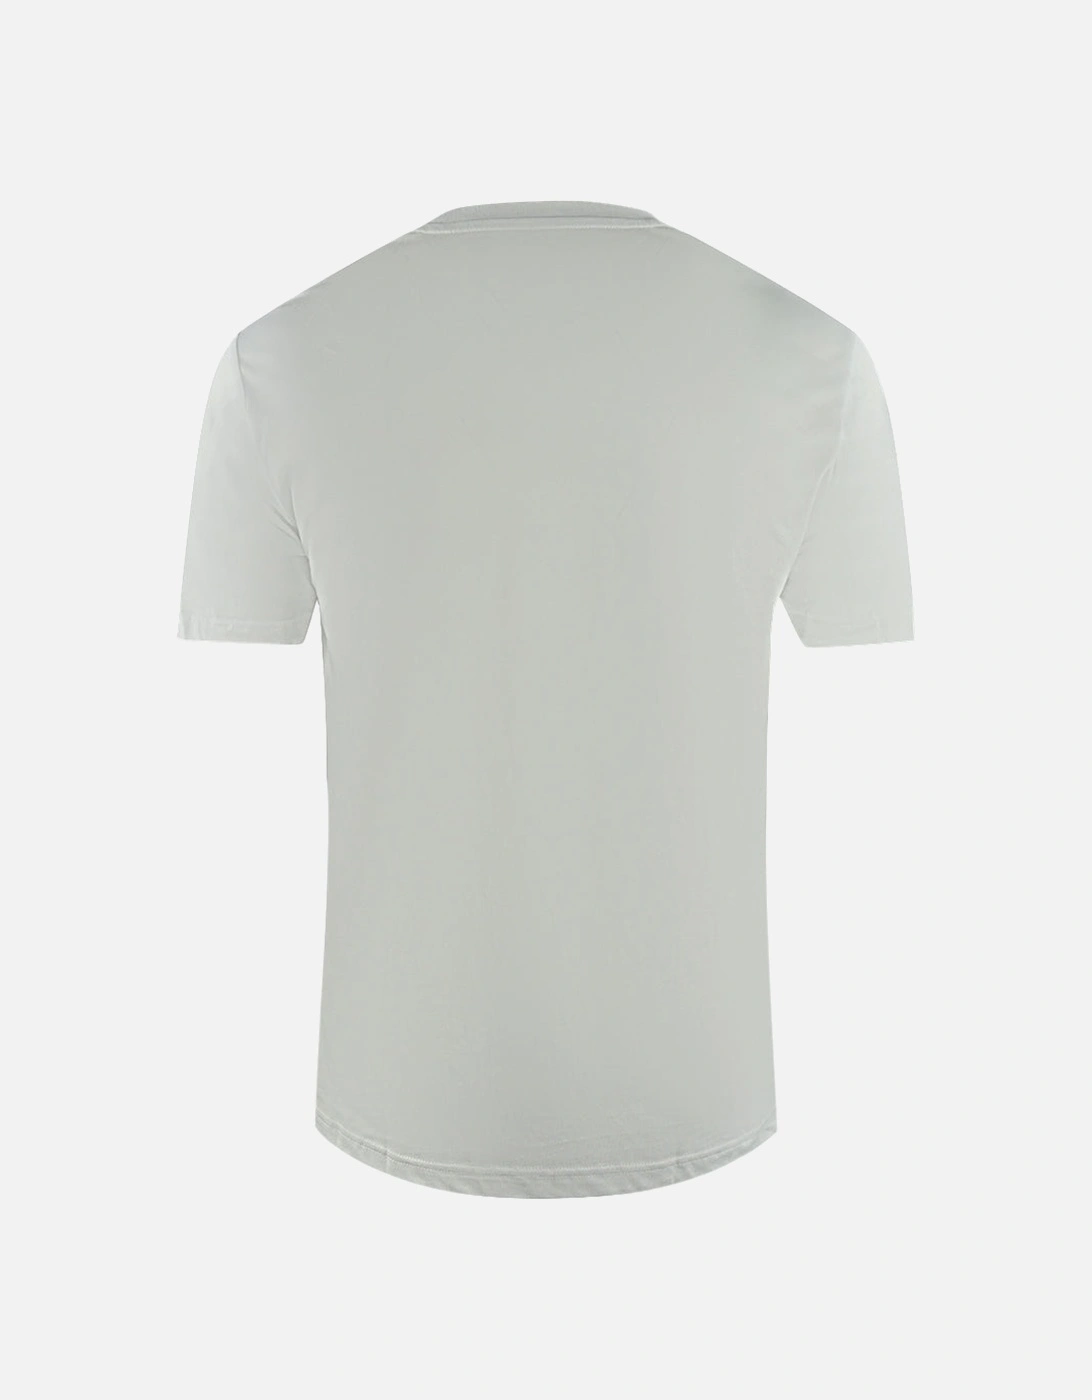 Box Logo White T-Shirt